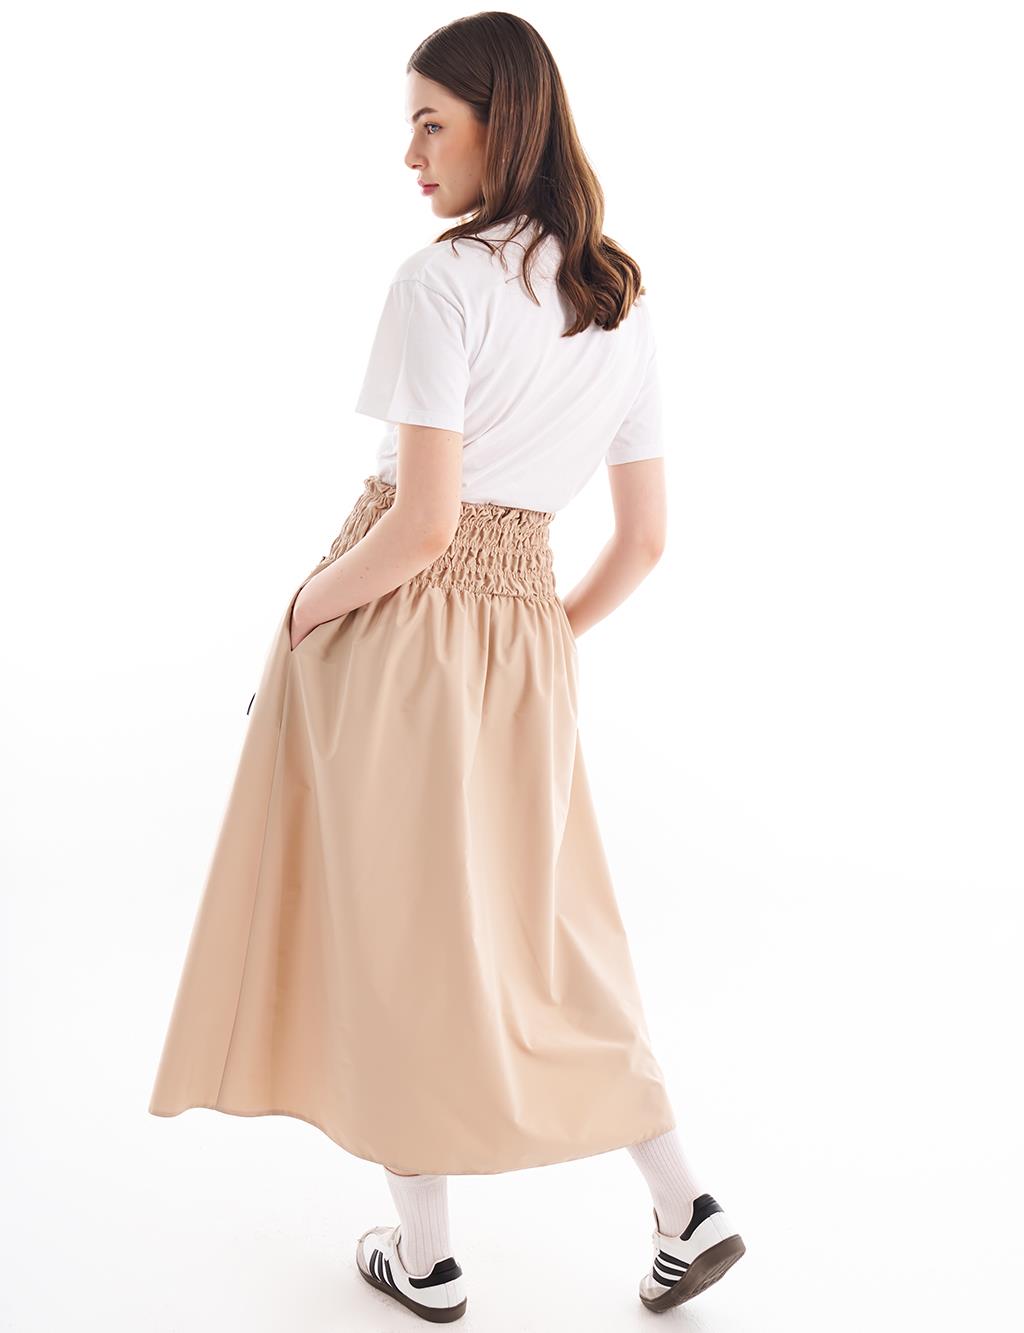 Elastic Waist Accessory Detailed Skirt Beige